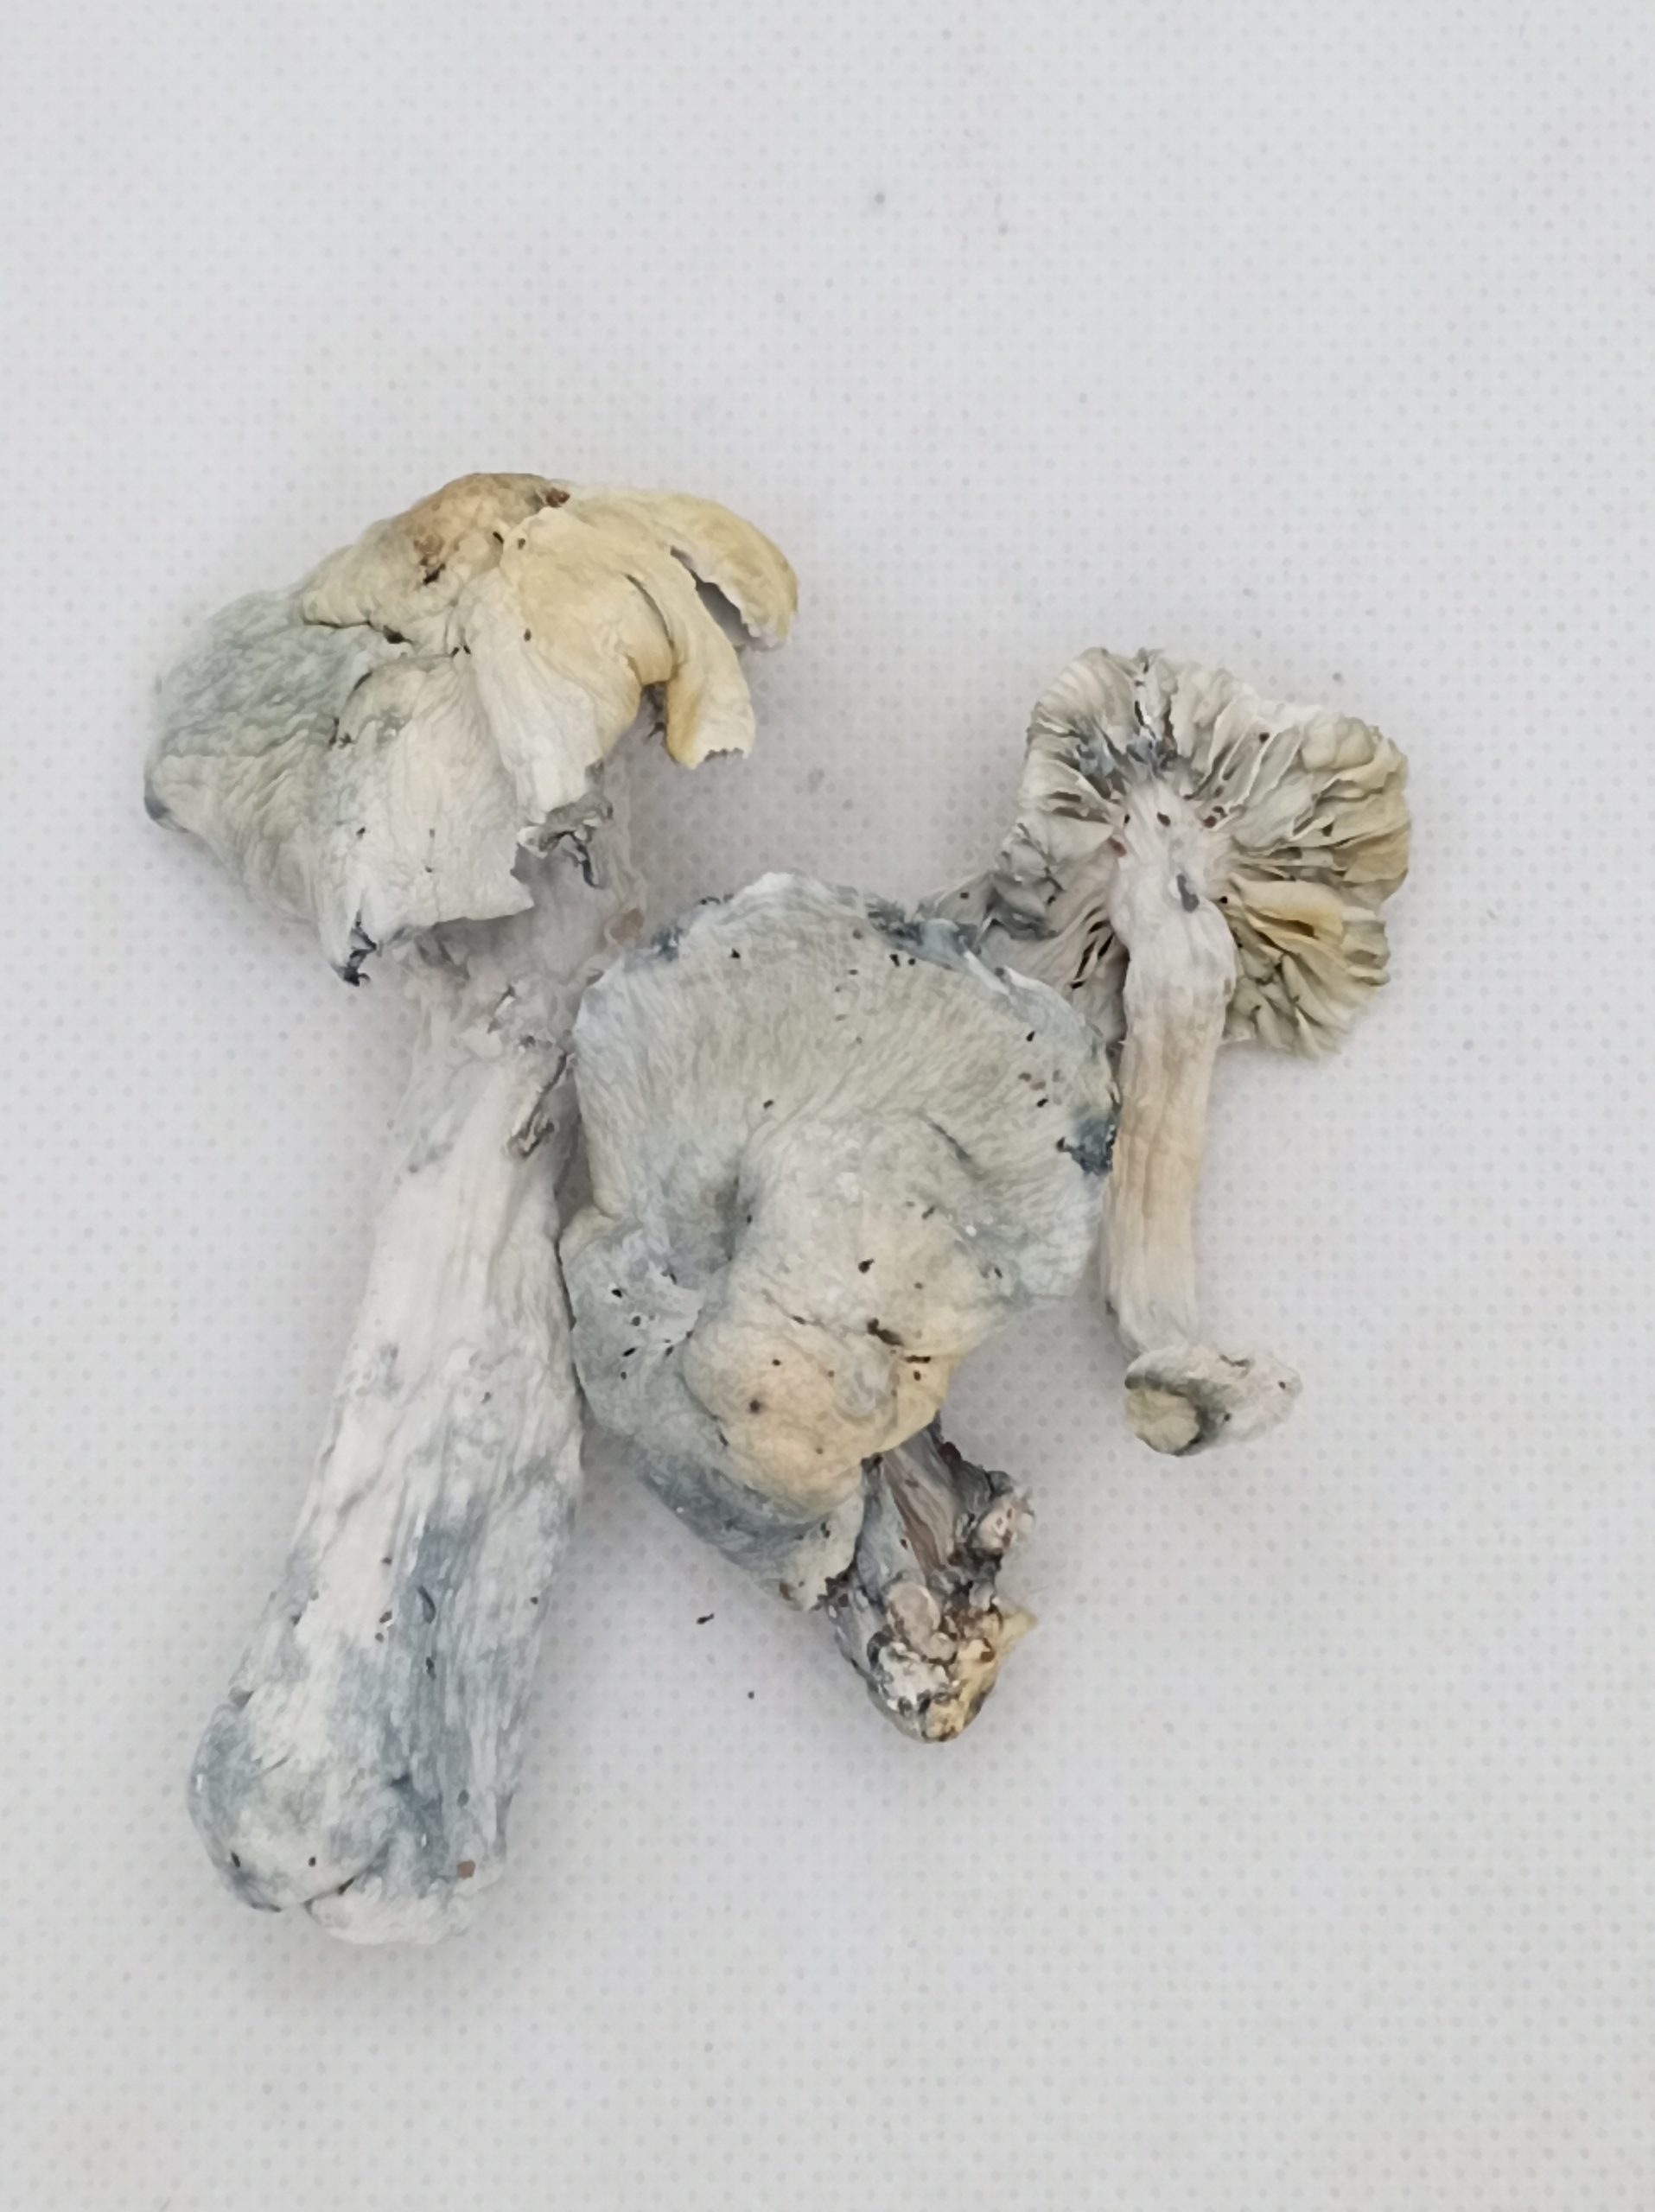 Phobo – Dry Mushrooms